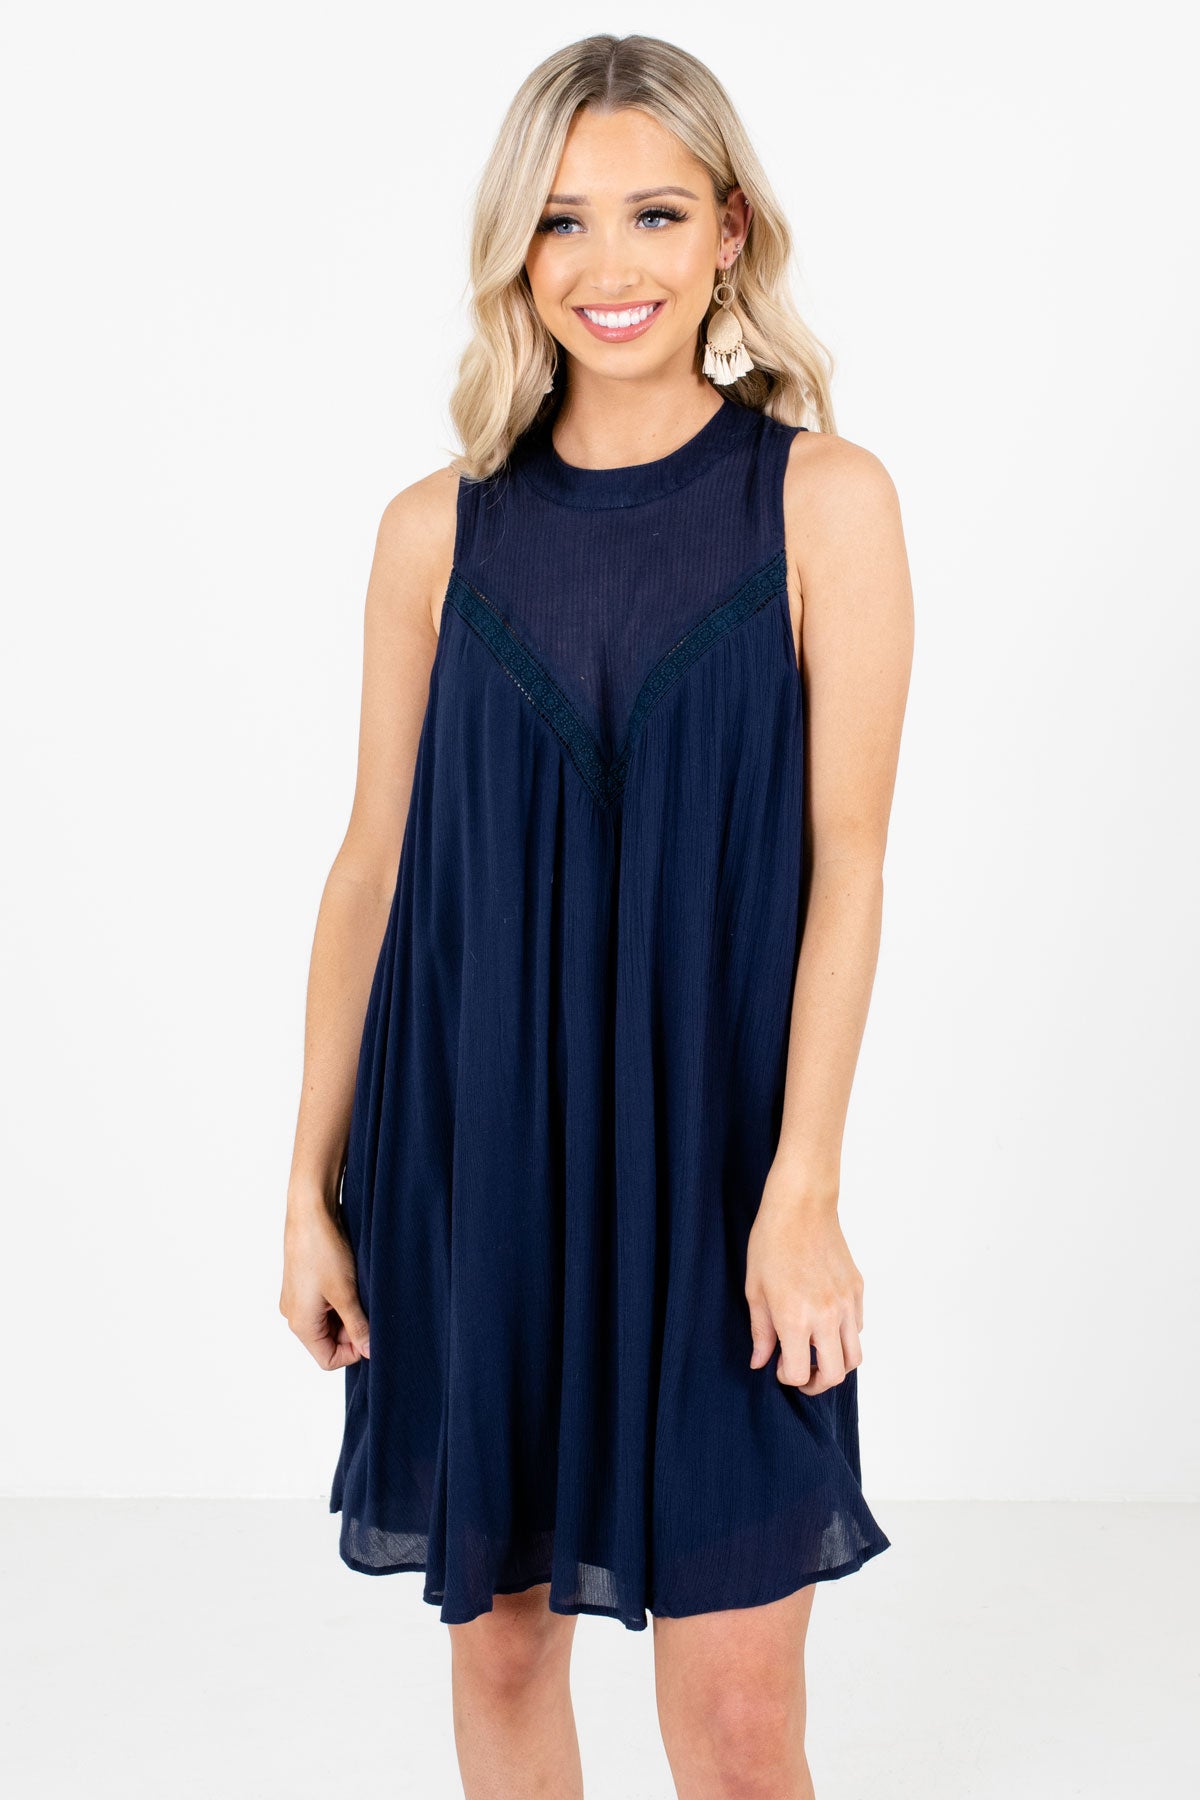 Navy Blue Knee-Length Boutique Dresses for Women